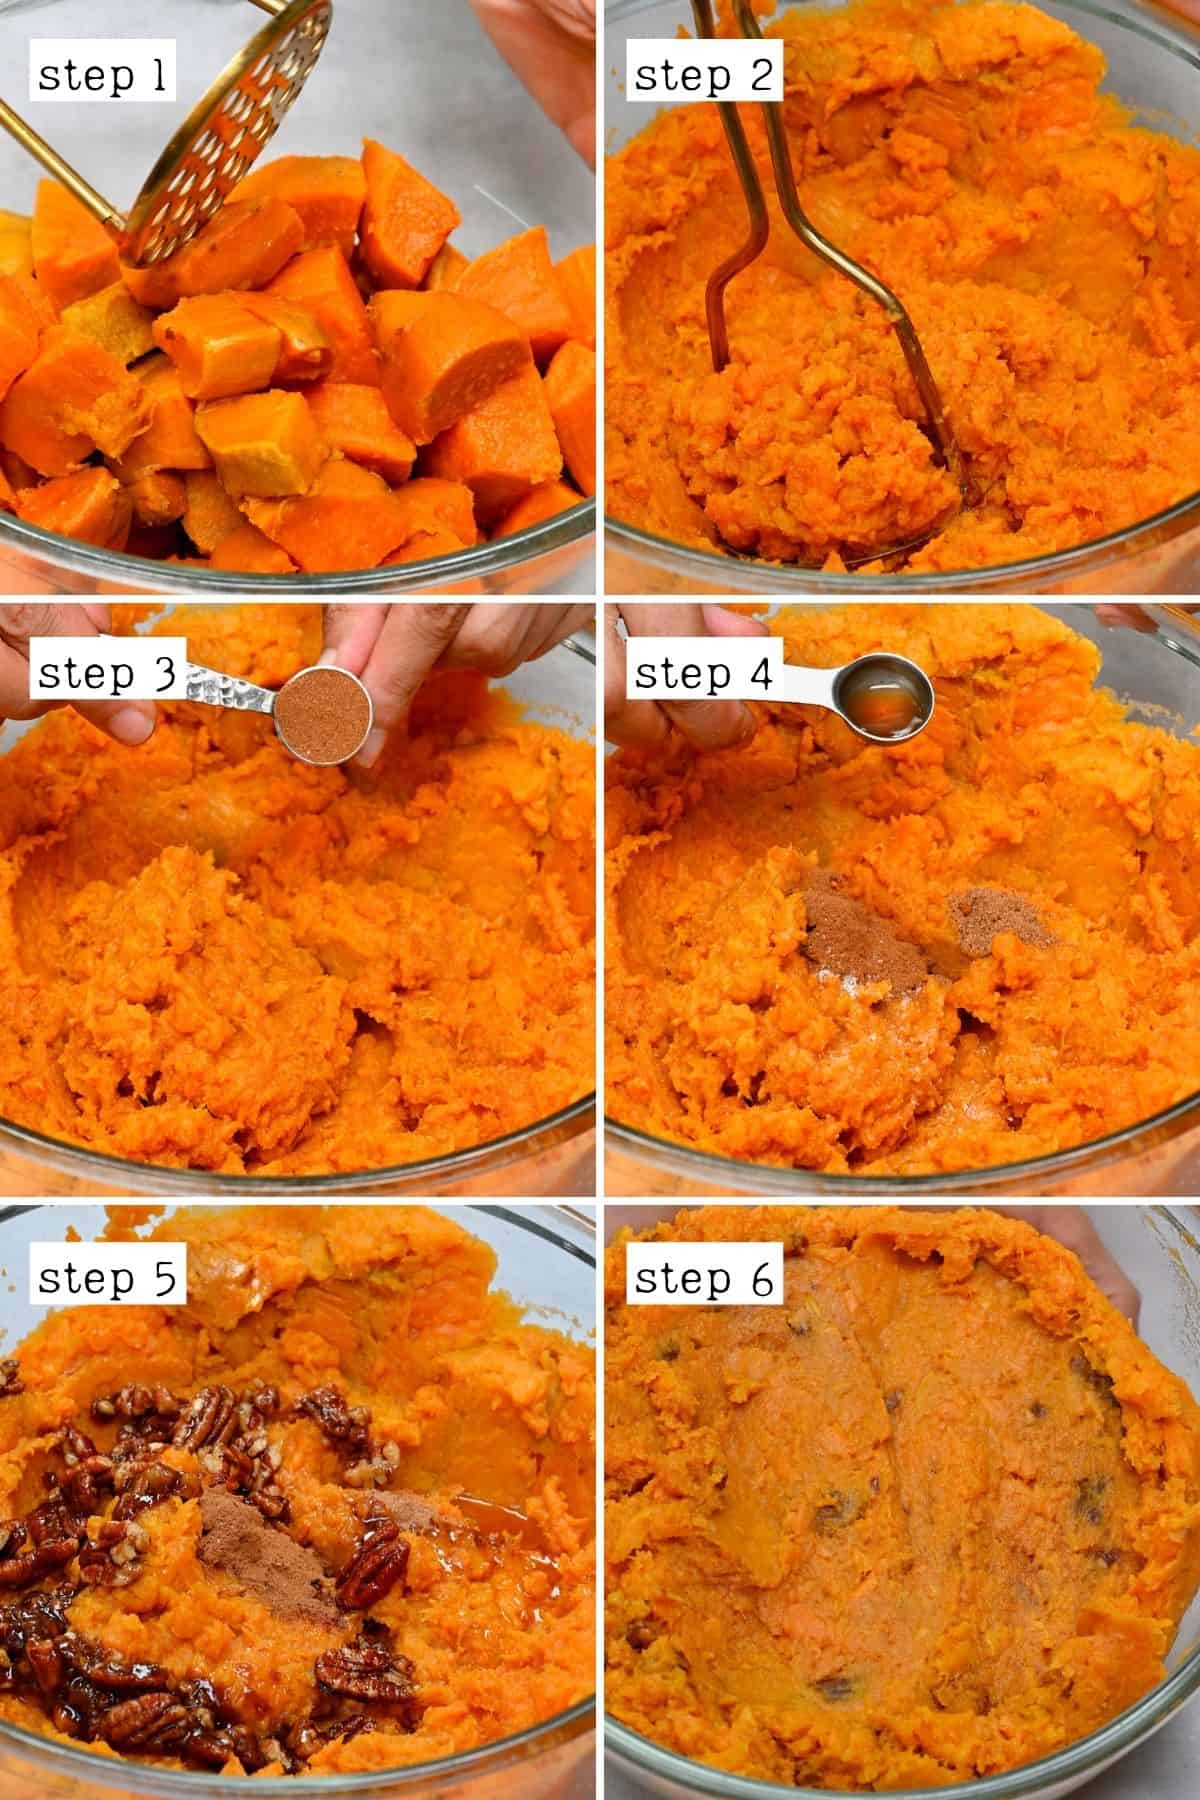 Steps for mashing and seasoning sweet potatoes